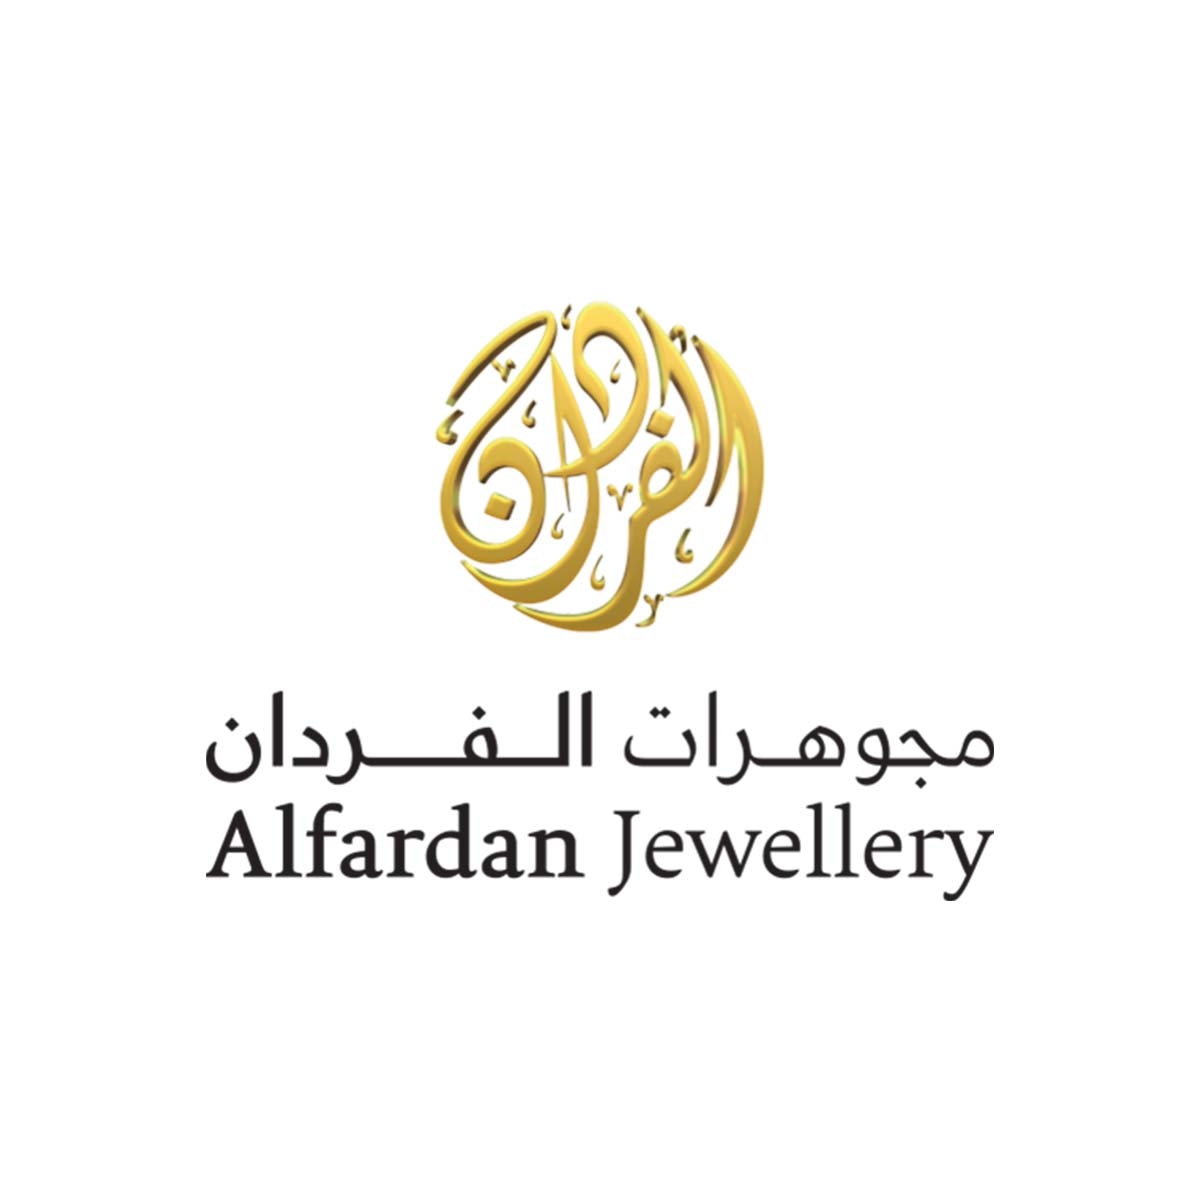 Al Fardan Jewellery